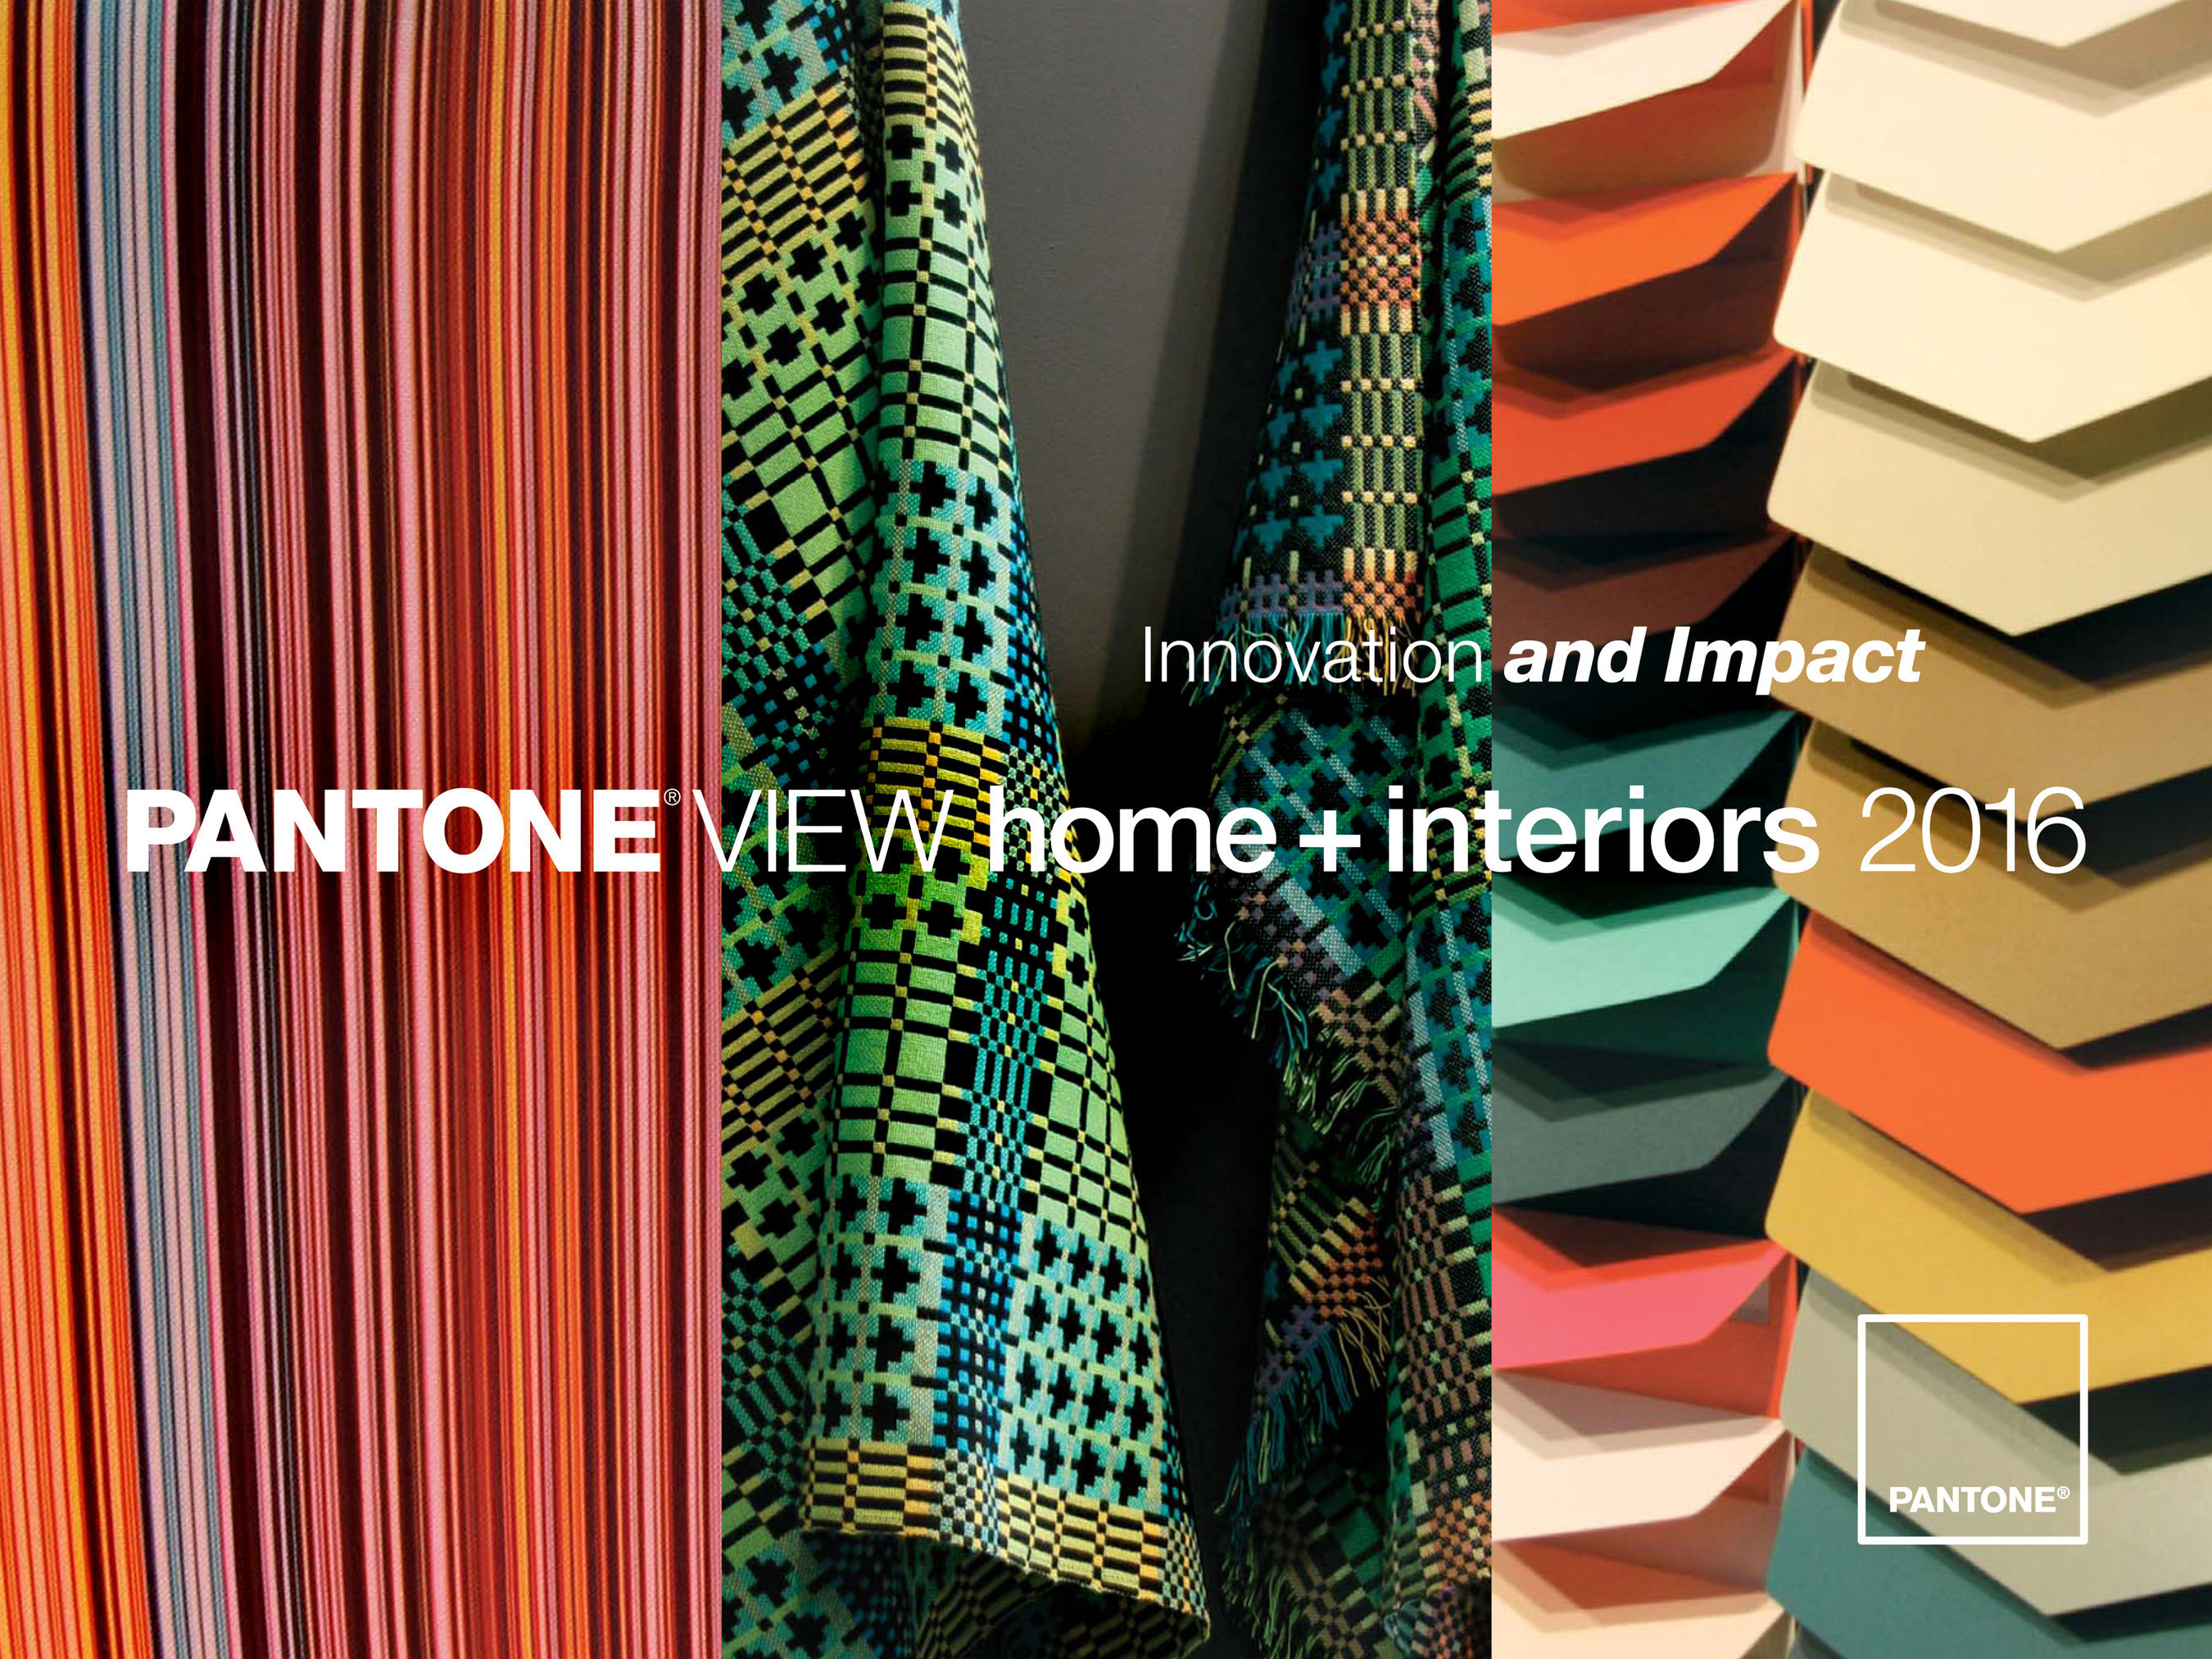 PANTONE VIEW home + interiors 2016